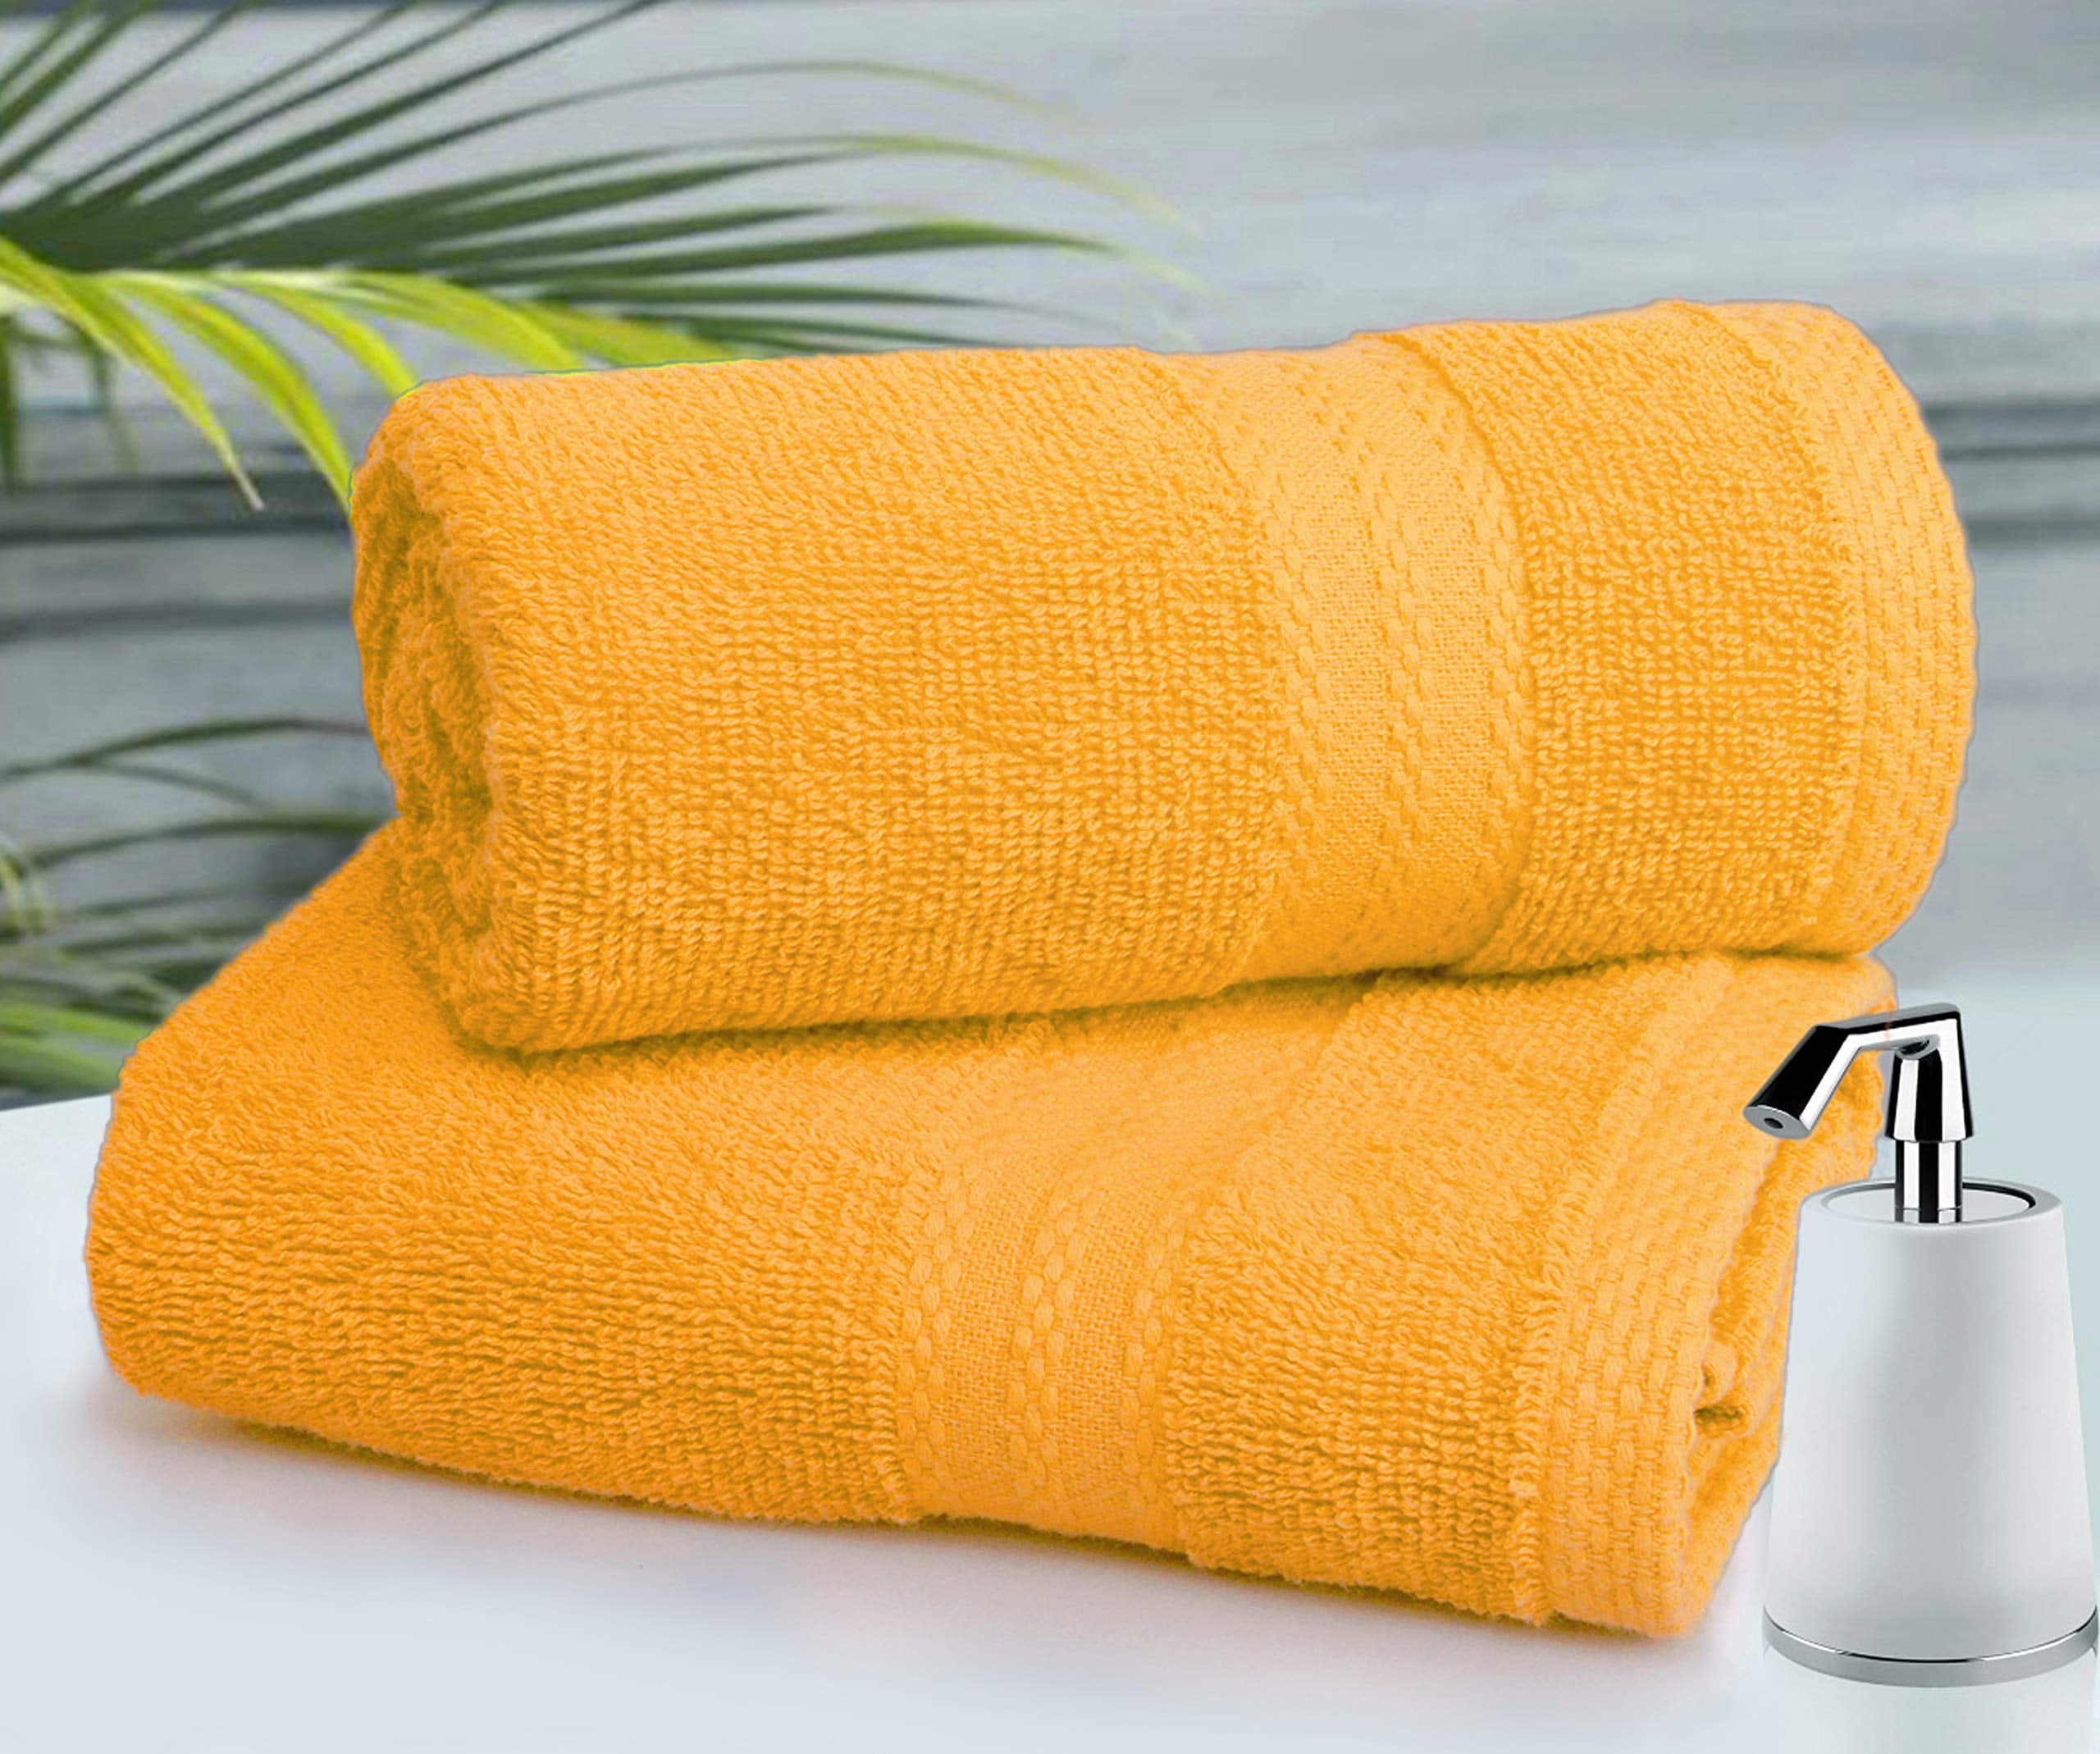 BUMBLE TOWELS Premium Combed Cotton Bath Towel, 4 Pack - Macy's